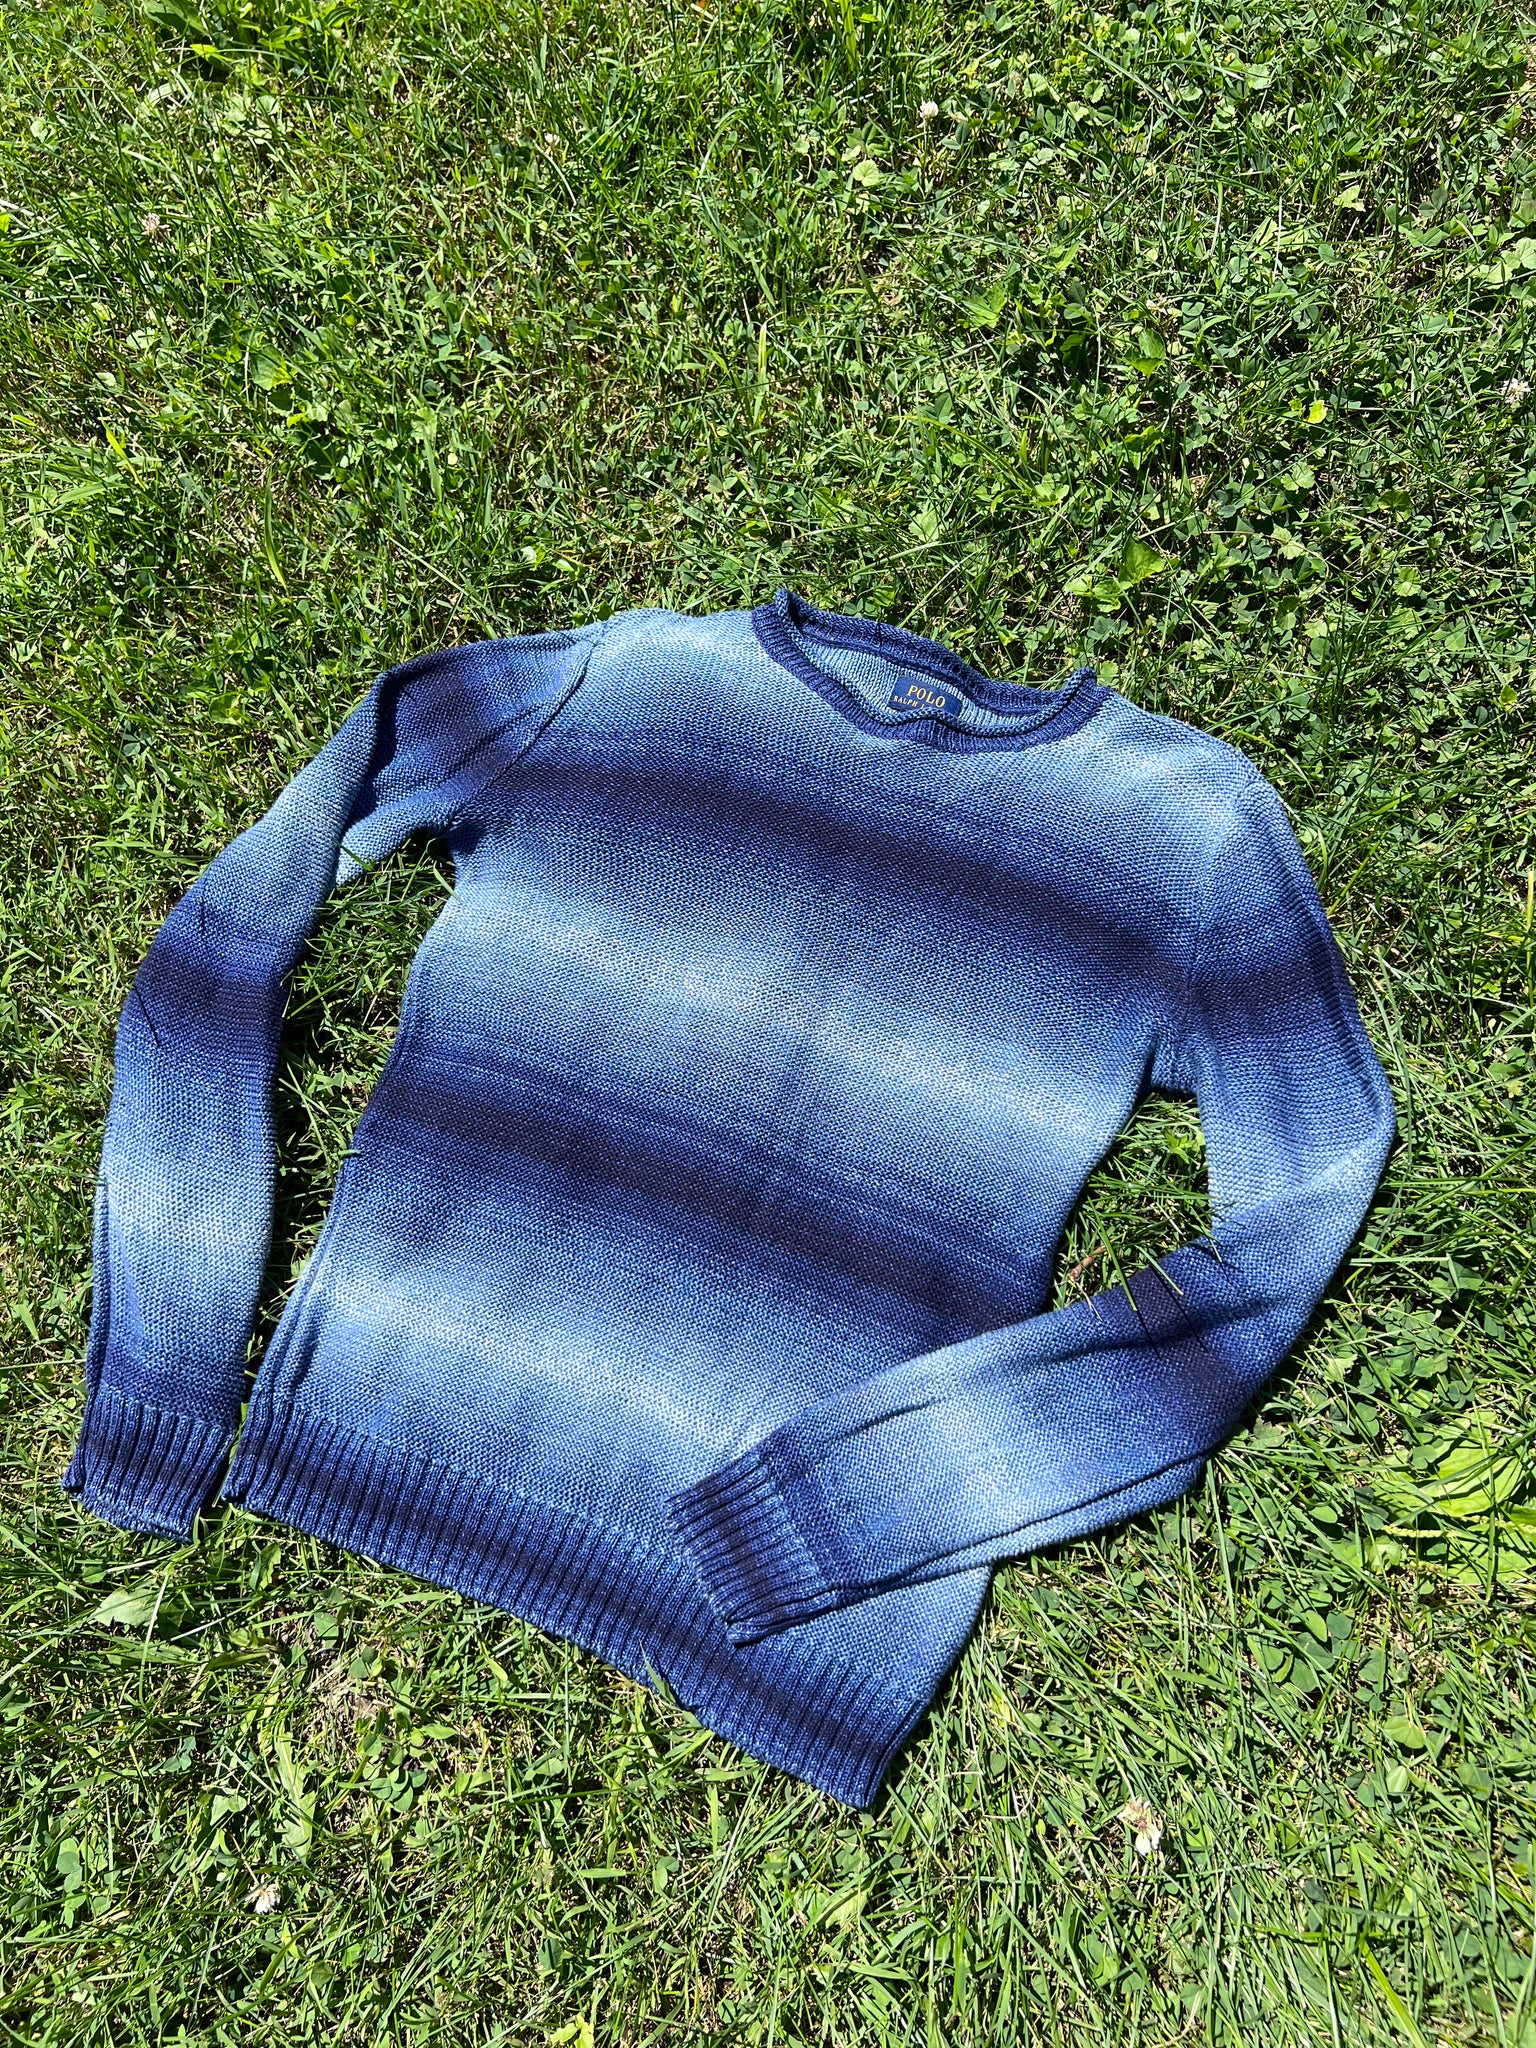 Blue Ombré Sweater by Polo Ralph Lauren